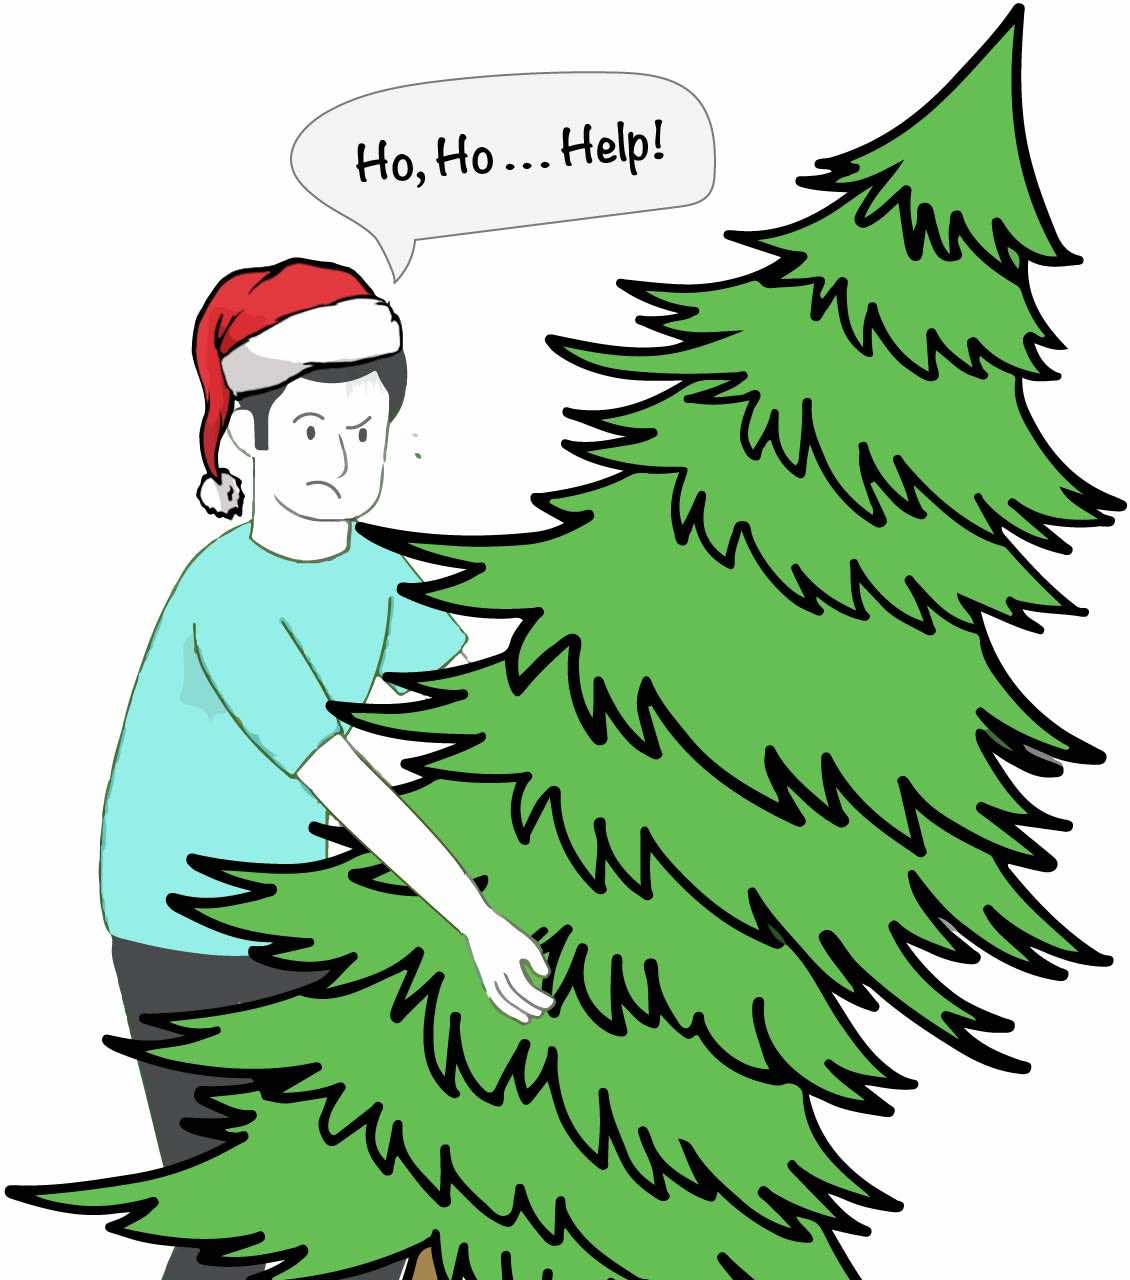 LoadUp offer FREE Christmas tree disposal this holiday season